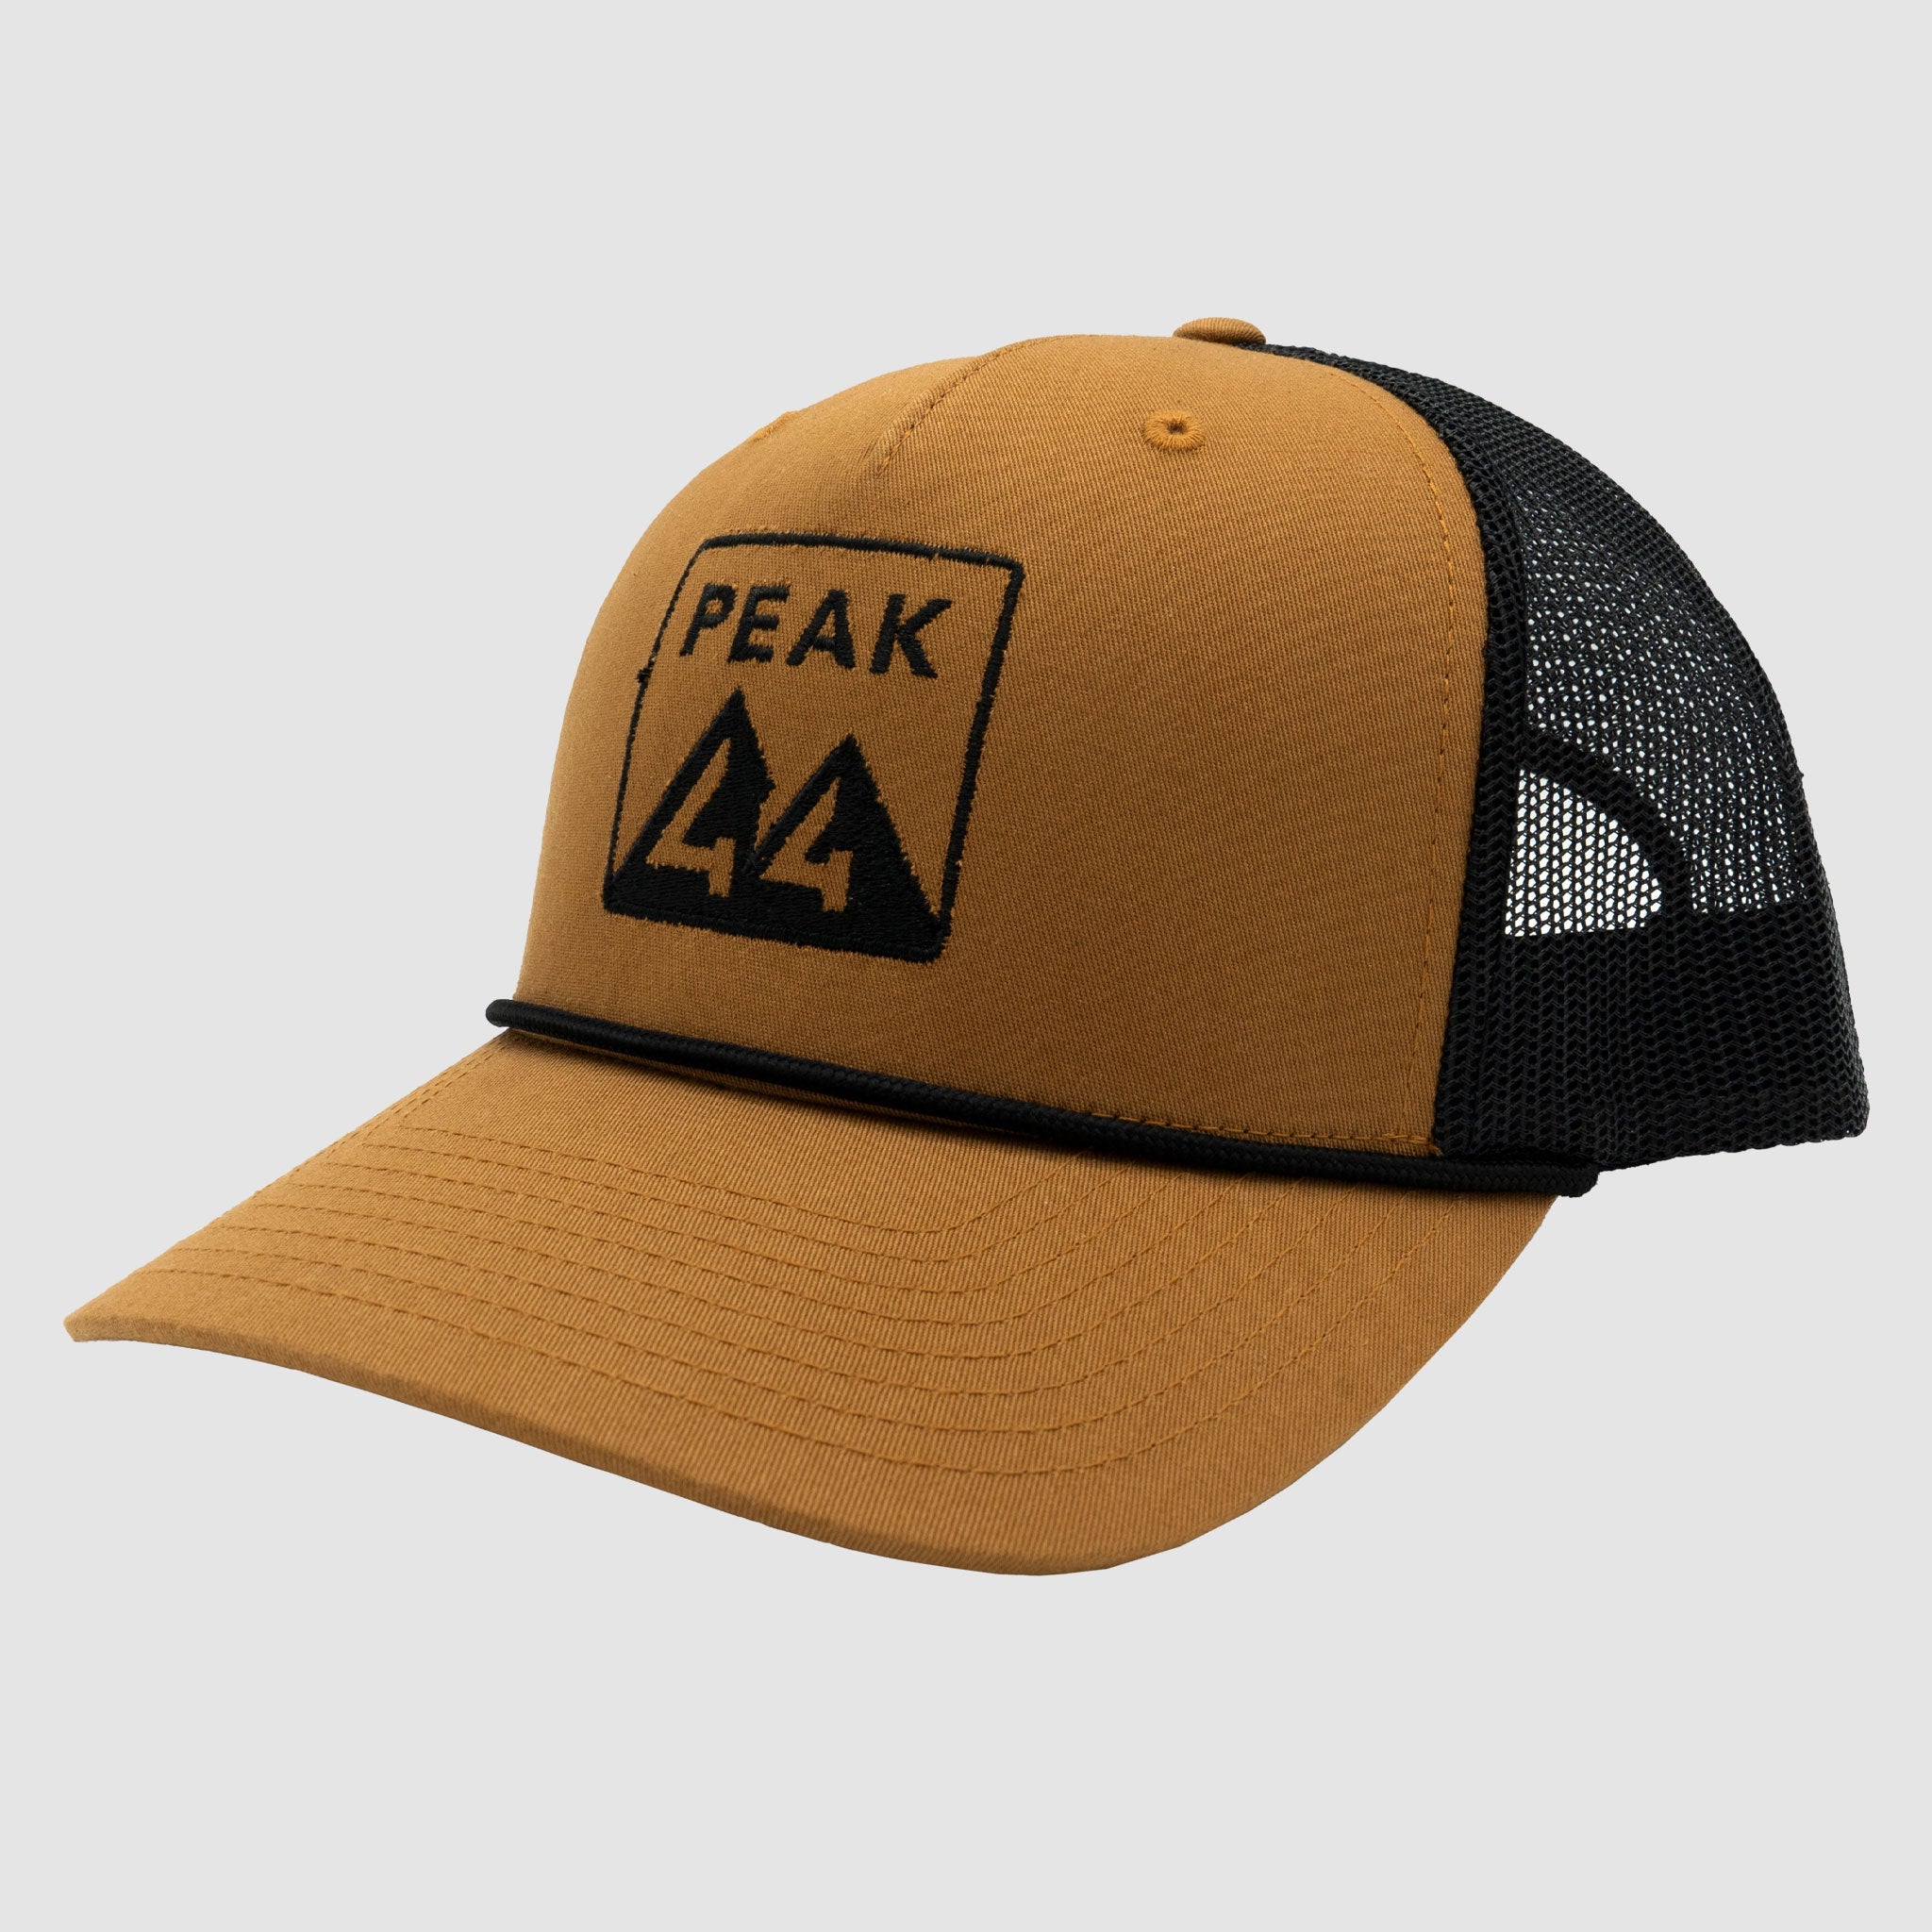 Peak 44 Caramel Rope Hat